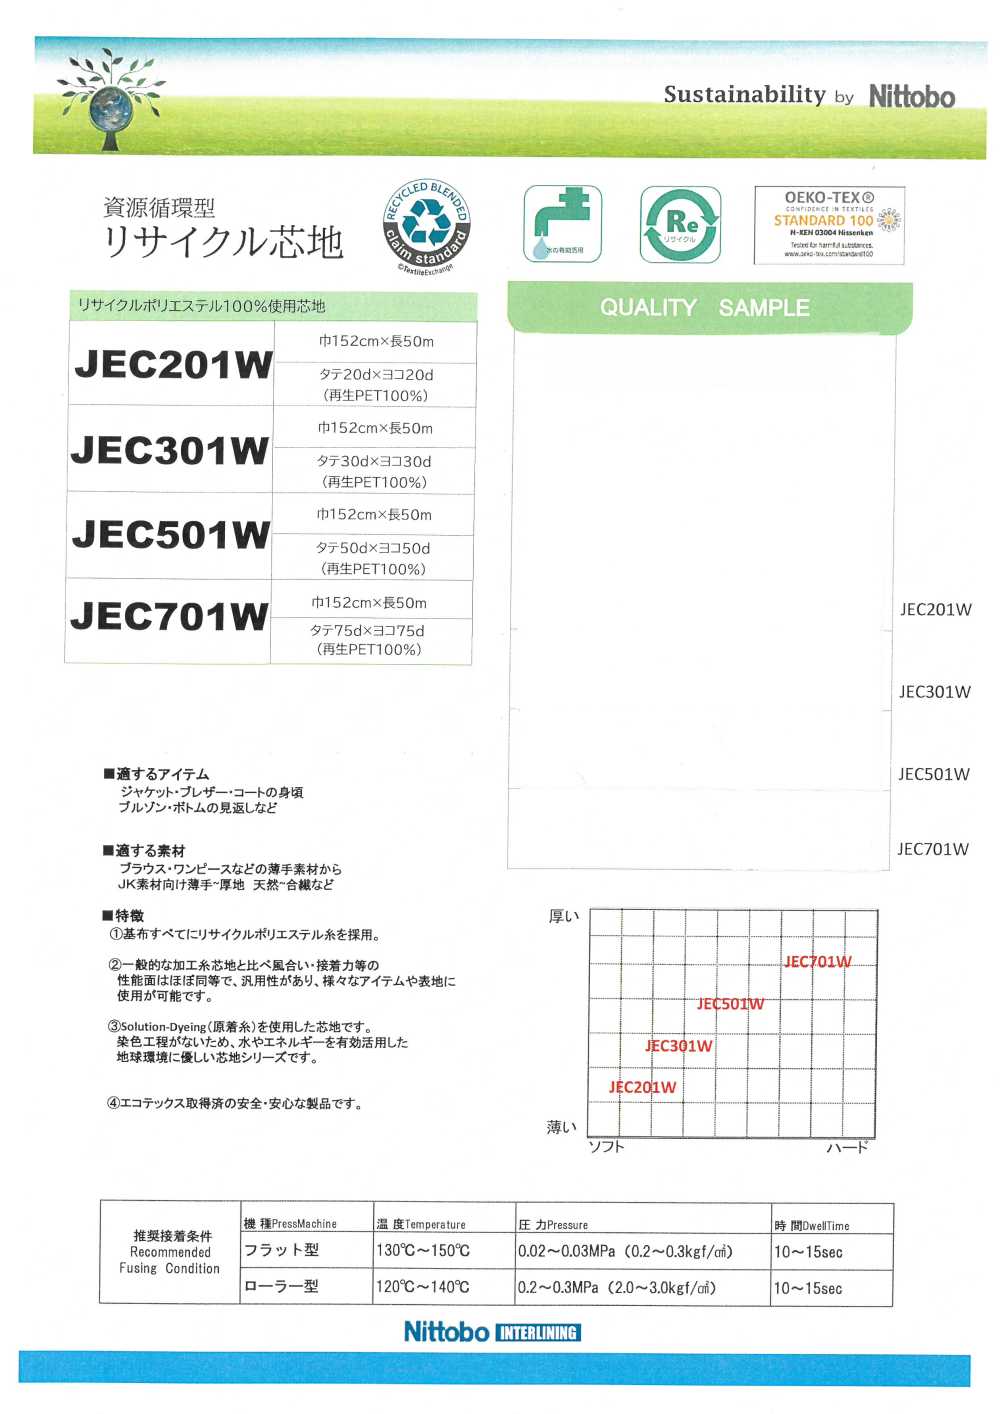 JEC501W 薄型多功能柔软衬布 50D 使用再生材料 日东纺绩